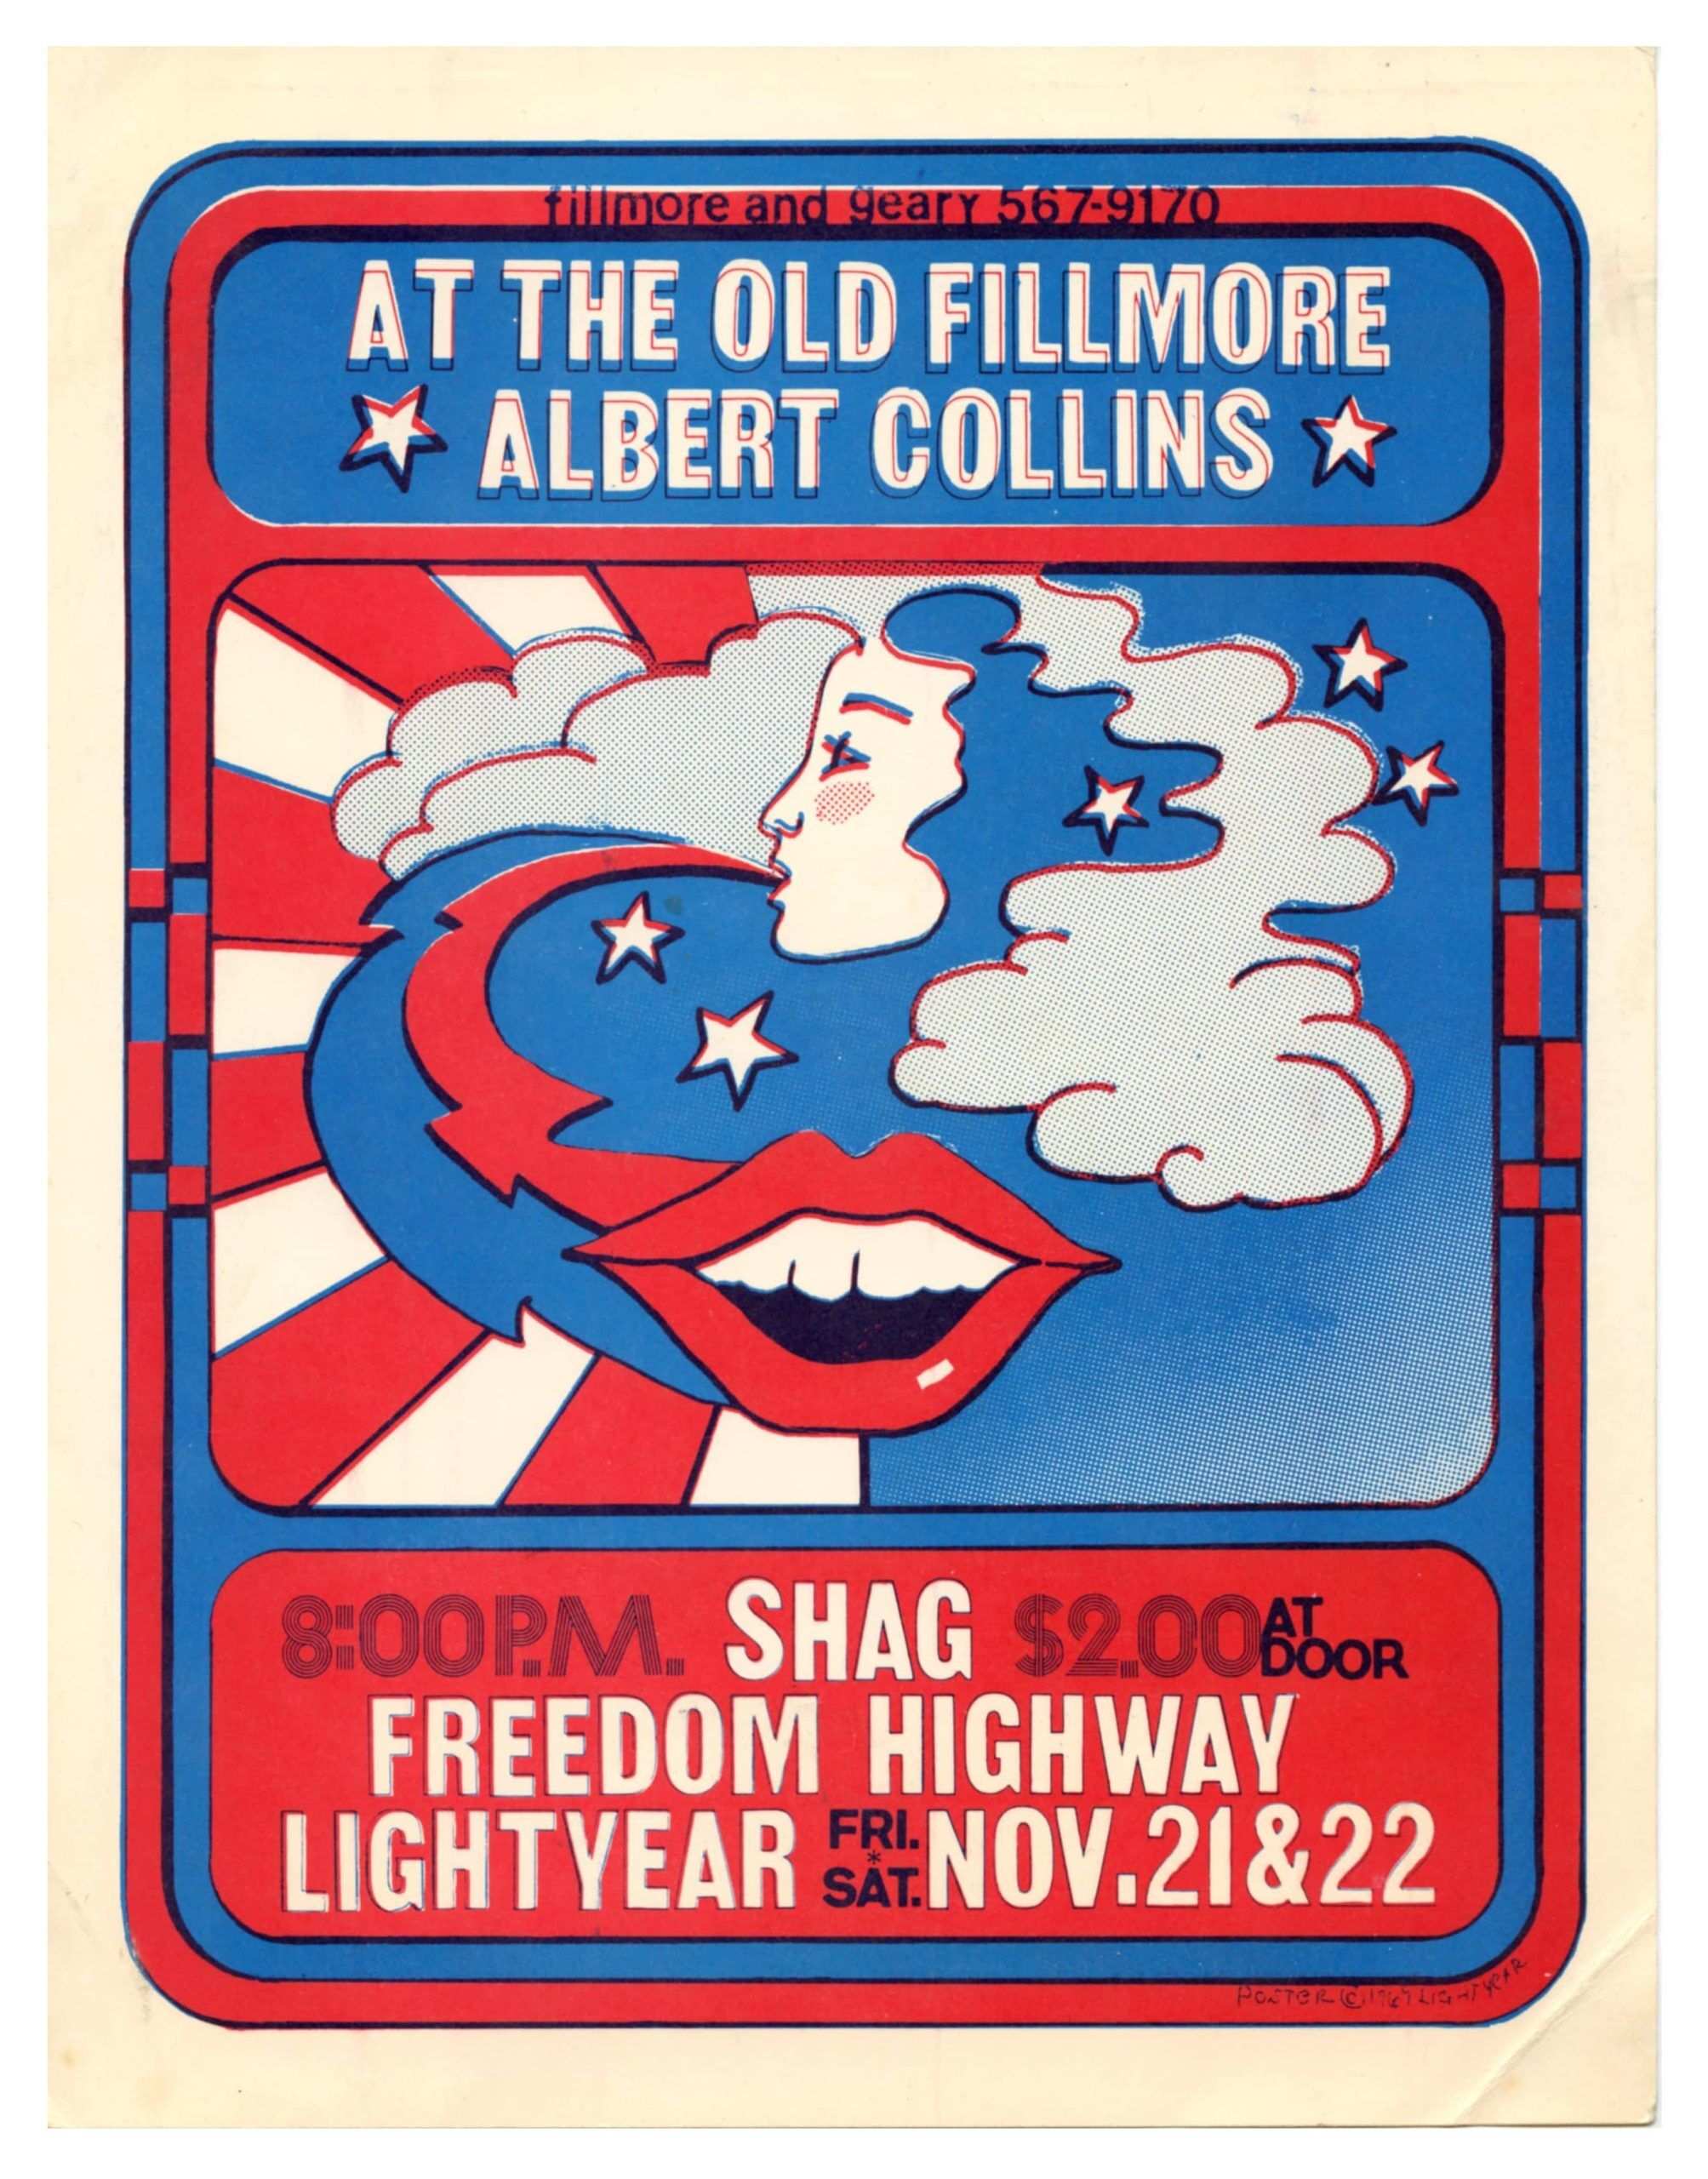 Albert Collins Handbill w/ Shag Freedom Highway 1969 The Old Fillmore